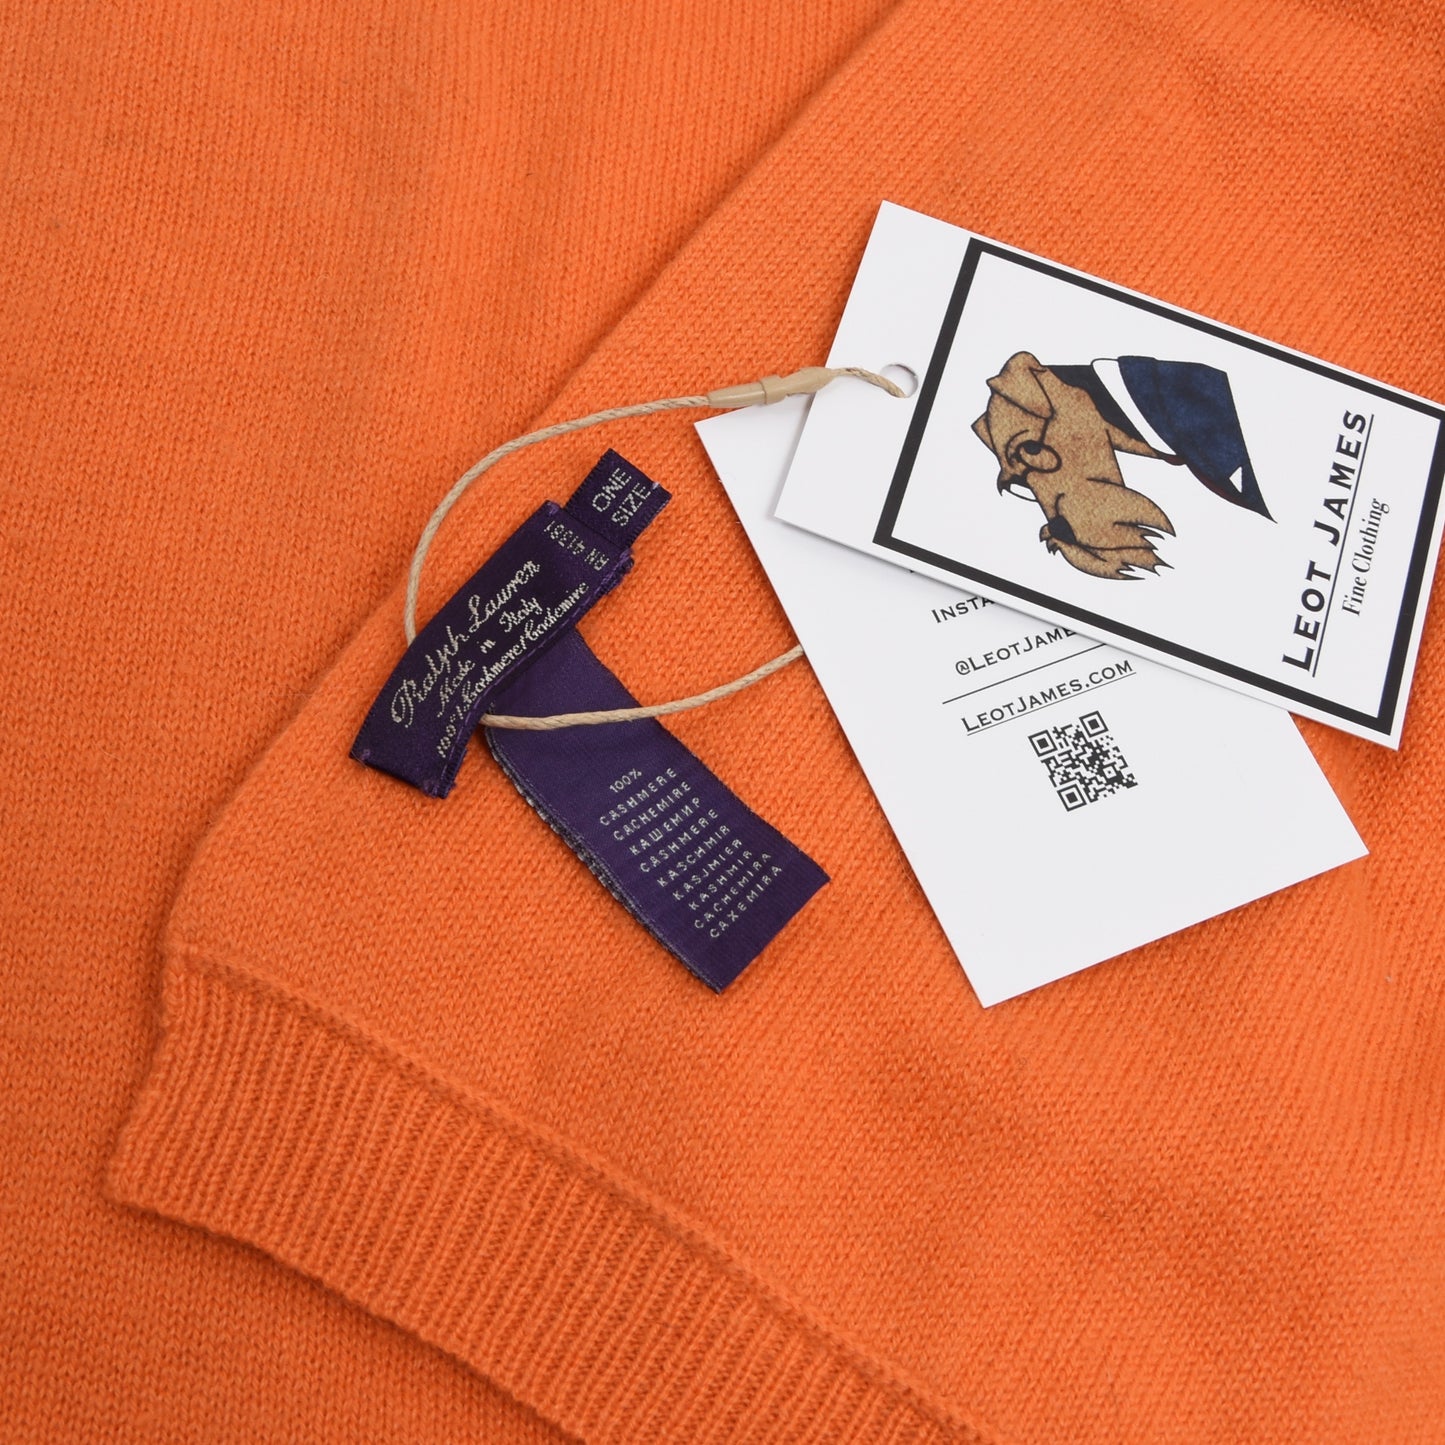 Ralph Lauren Purple Label 100% Cashmere Scarf - Orange